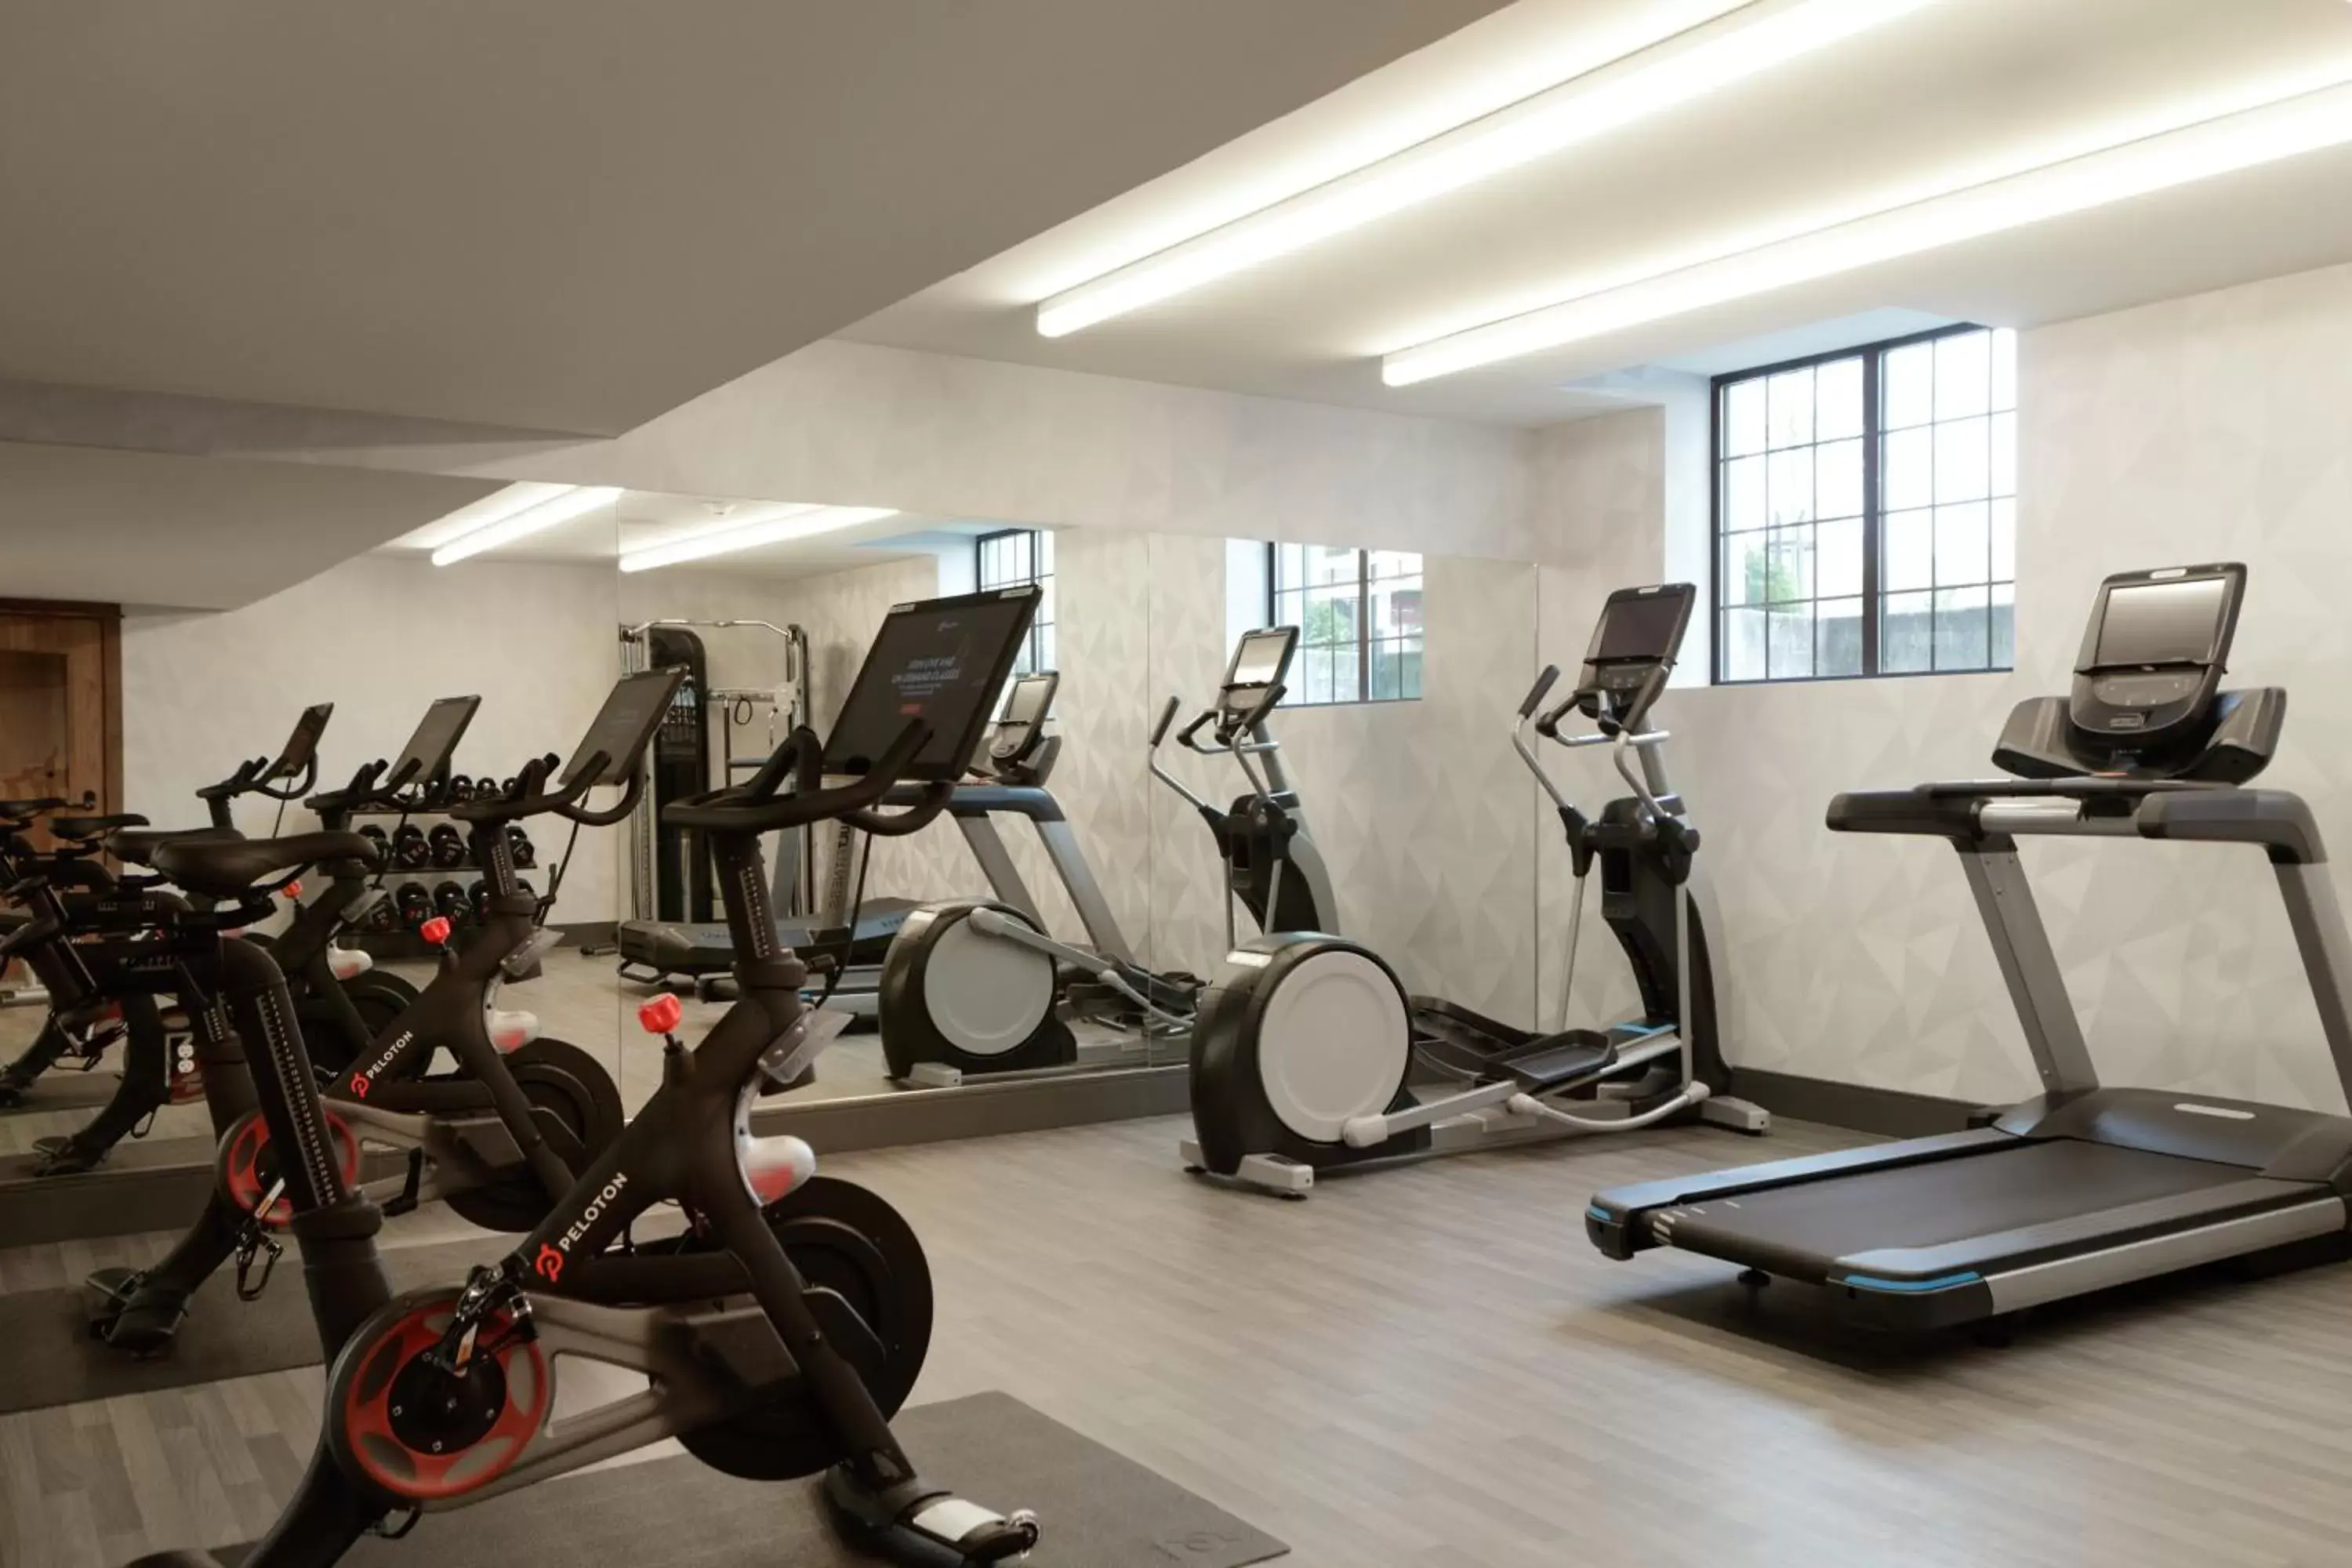 Fitness centre/facilities, Fitness Center/Facilities in Kimpton - Armory Hotel Bozeman, an IHG Hotel